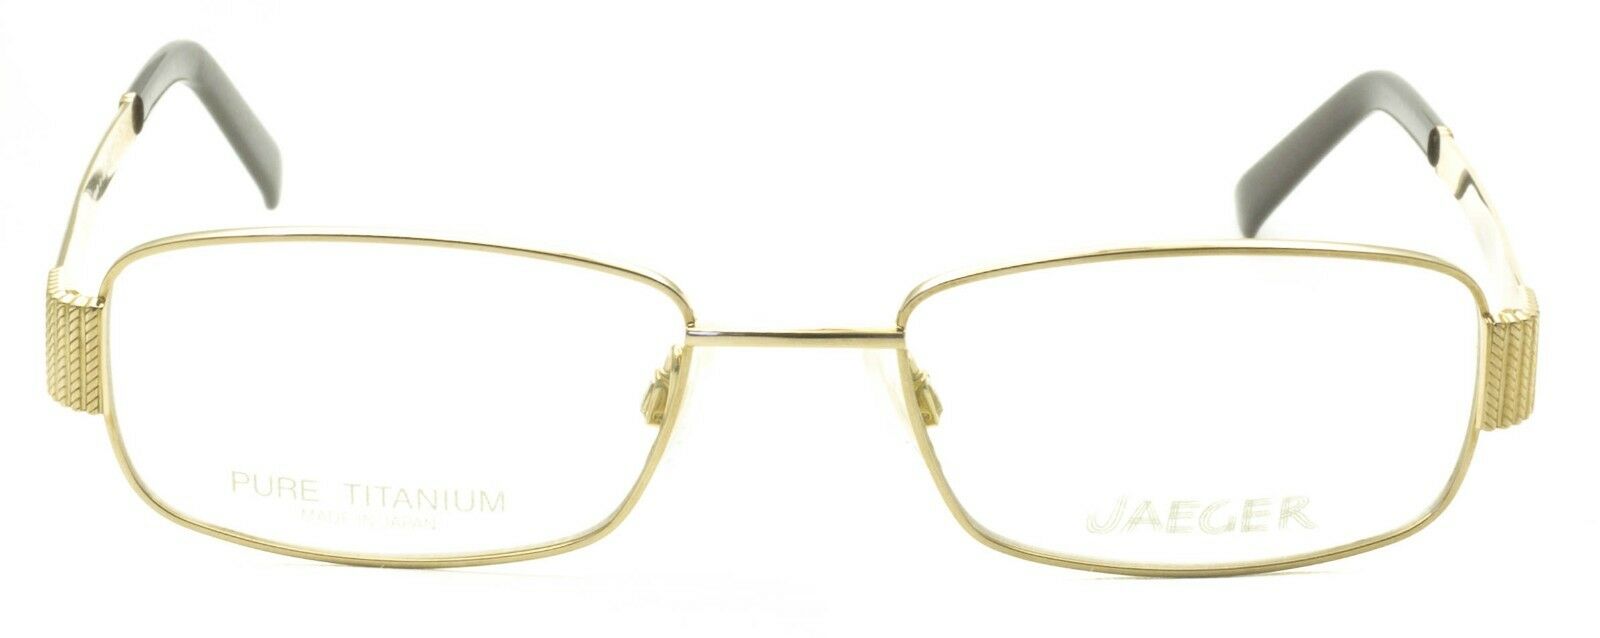 JAEGER Mod. 278 C.15 52mm Eyewear FRAMES RX Optical Glasses Eyeglasses New Japan